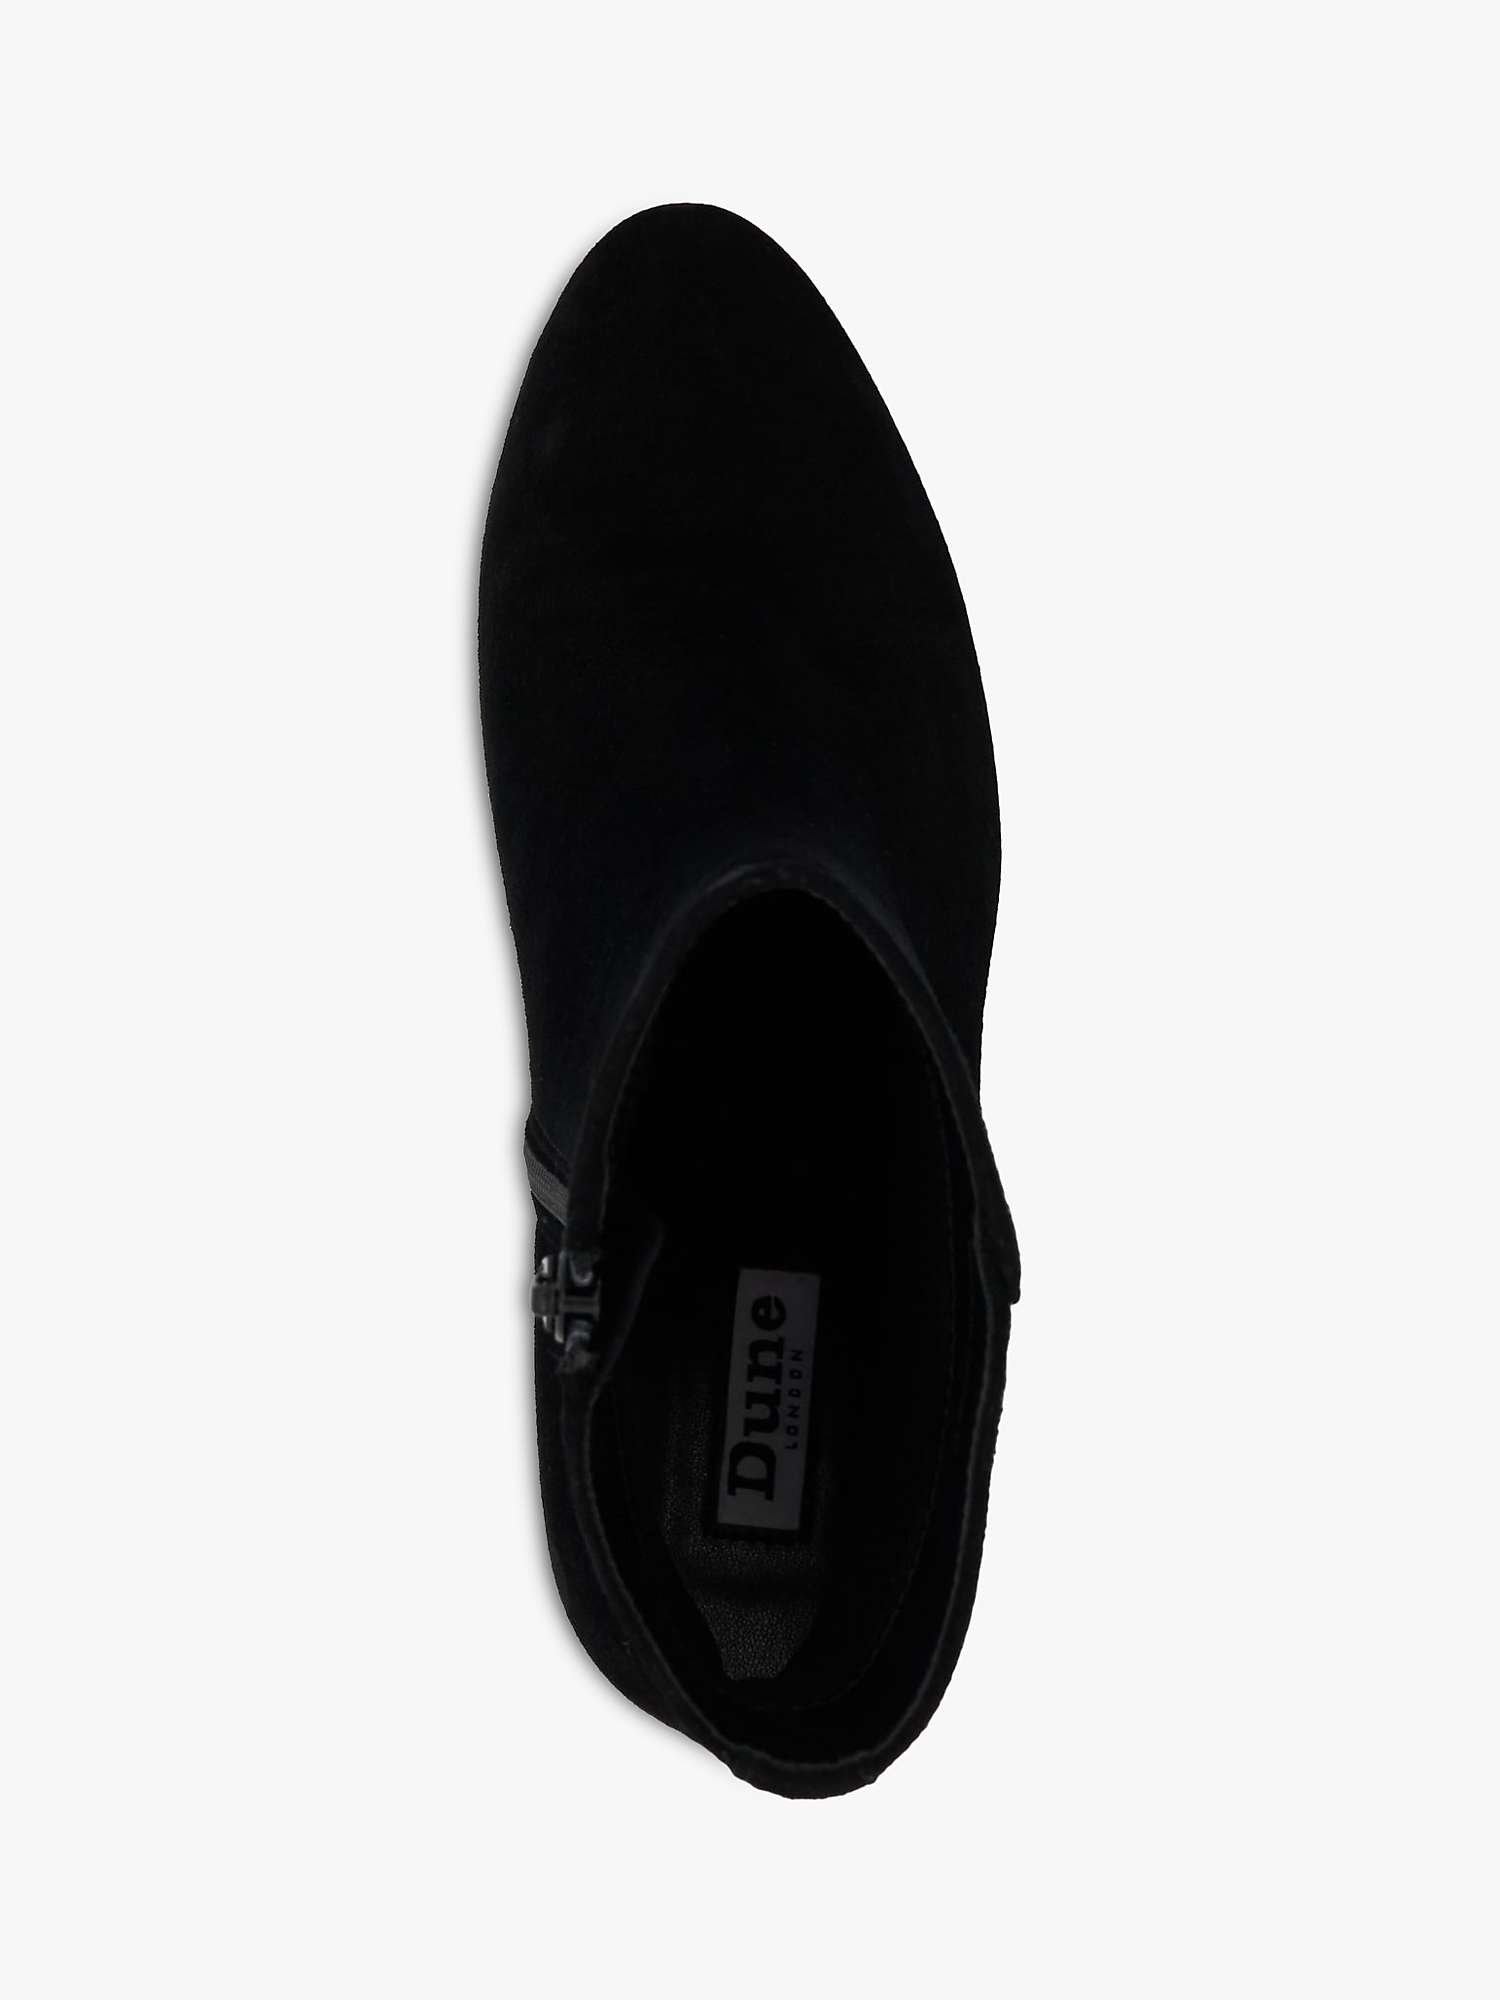 Buy Dune Optimism Suede Wedge Heel Ankle Boots, Black Online at johnlewis.com